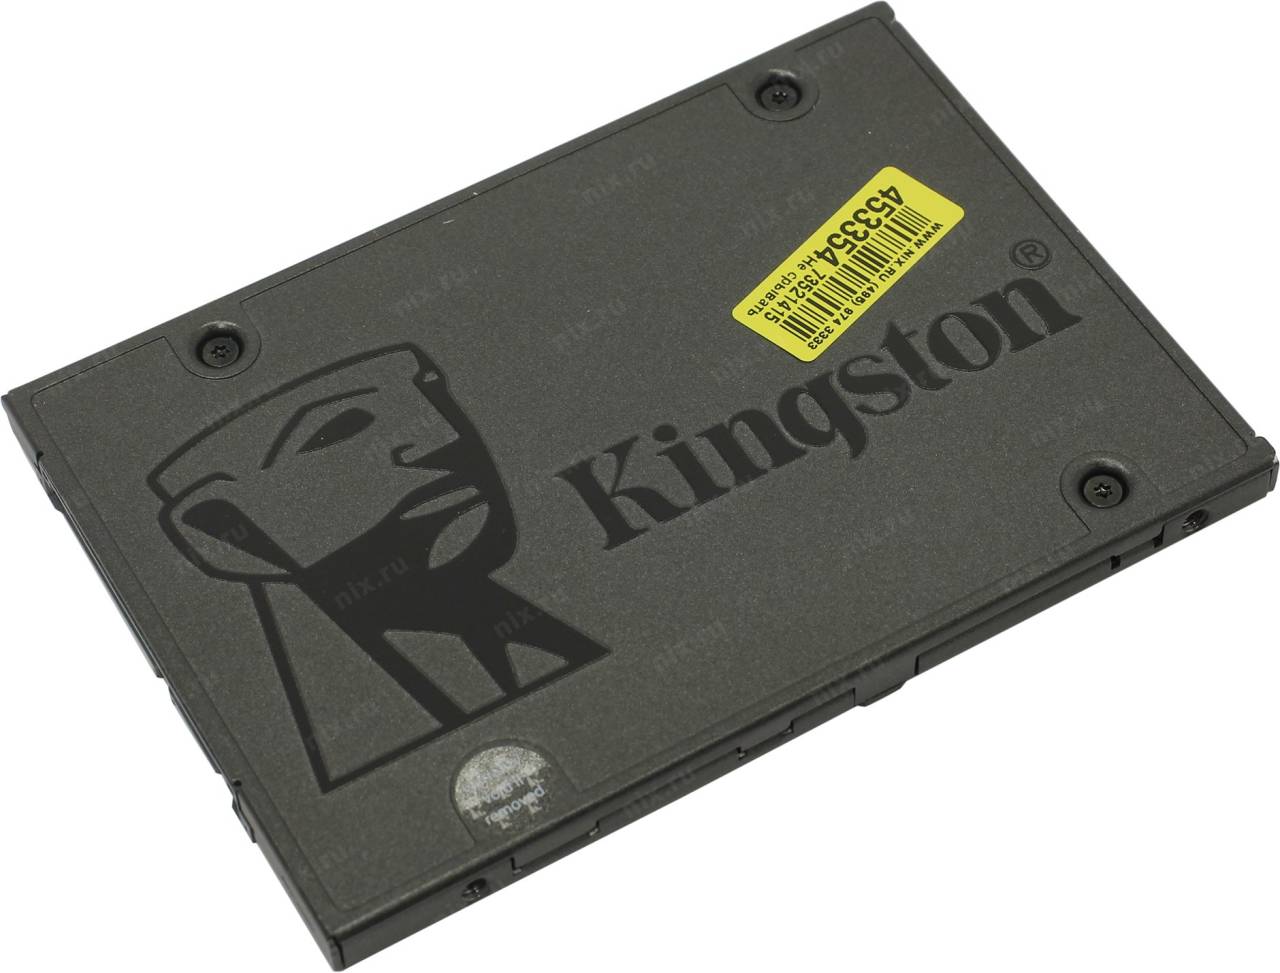   SSD 1.92 Tb SATA-III Kingston A400 [SA400S37/1920G] 2.5 TLC